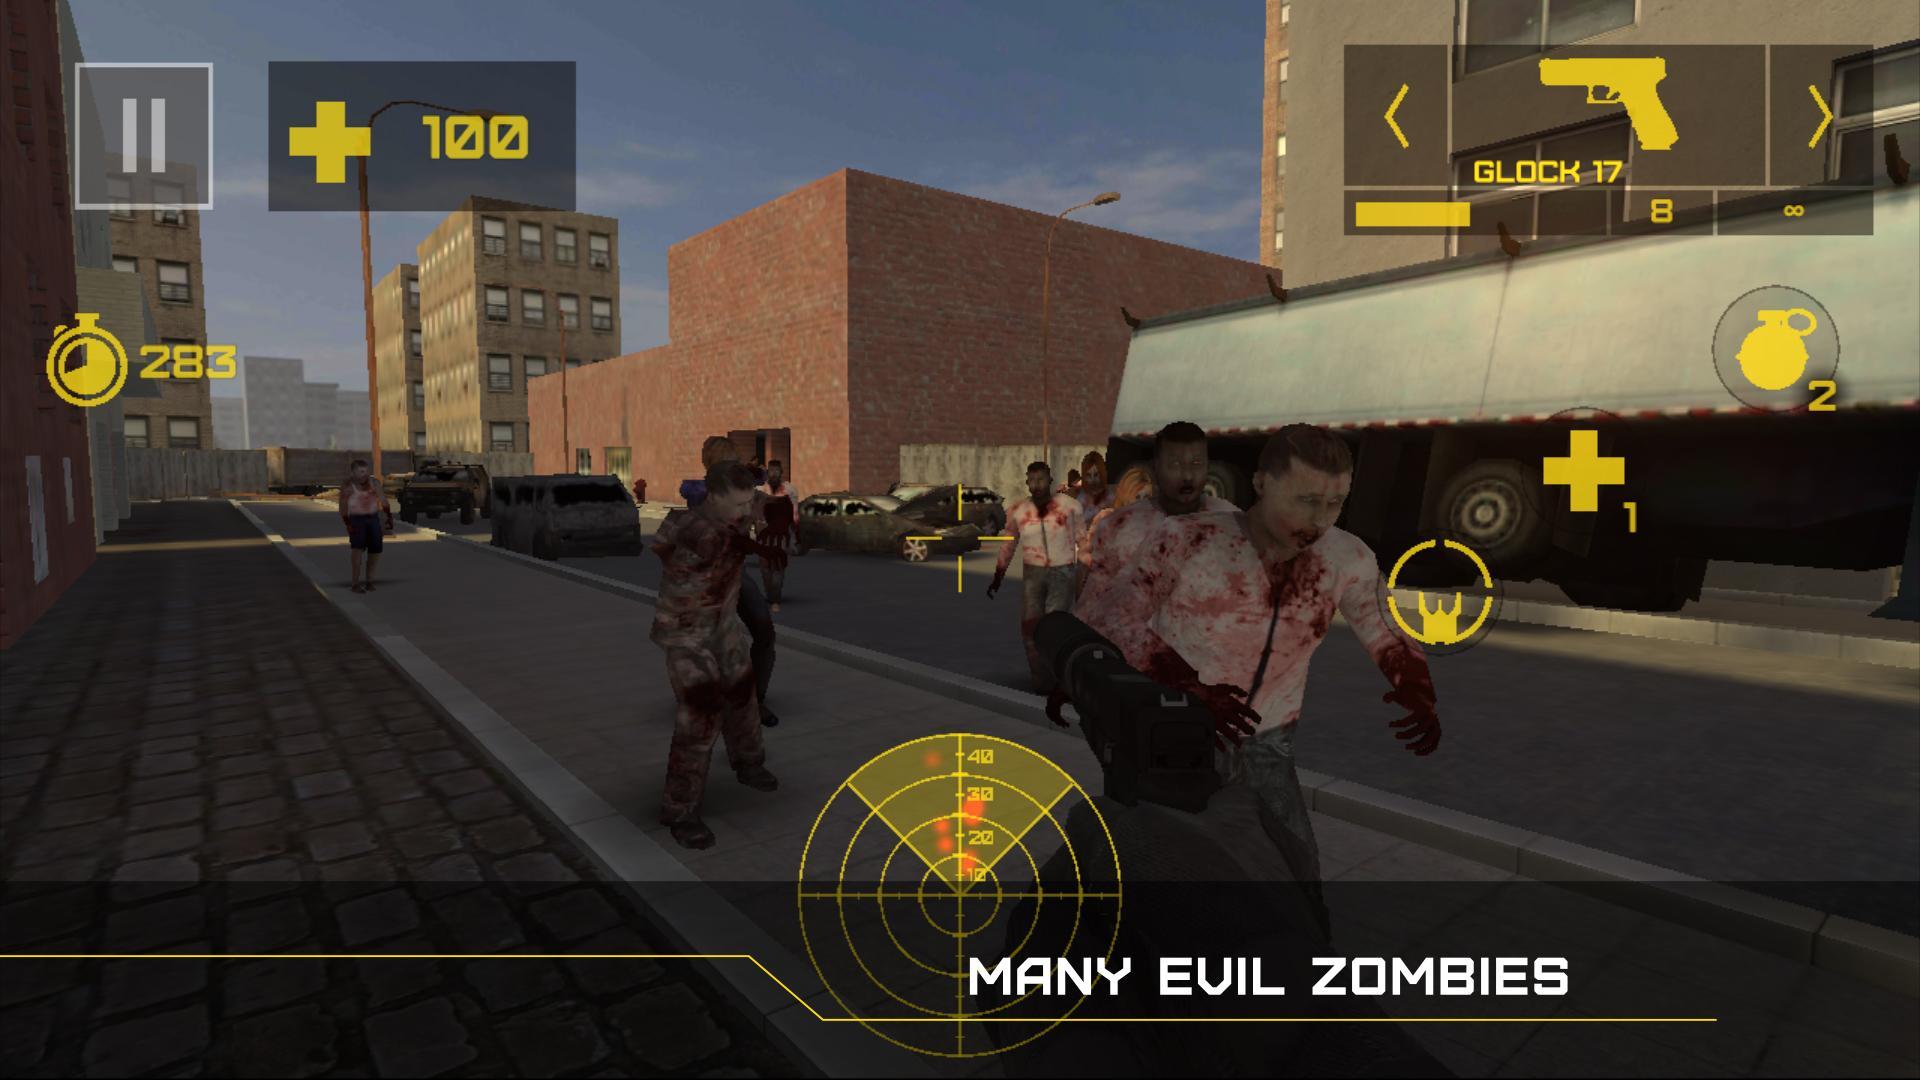 Zombie Defense Escape For Android Apk Download - survive the zombie attack glock 17 roblox